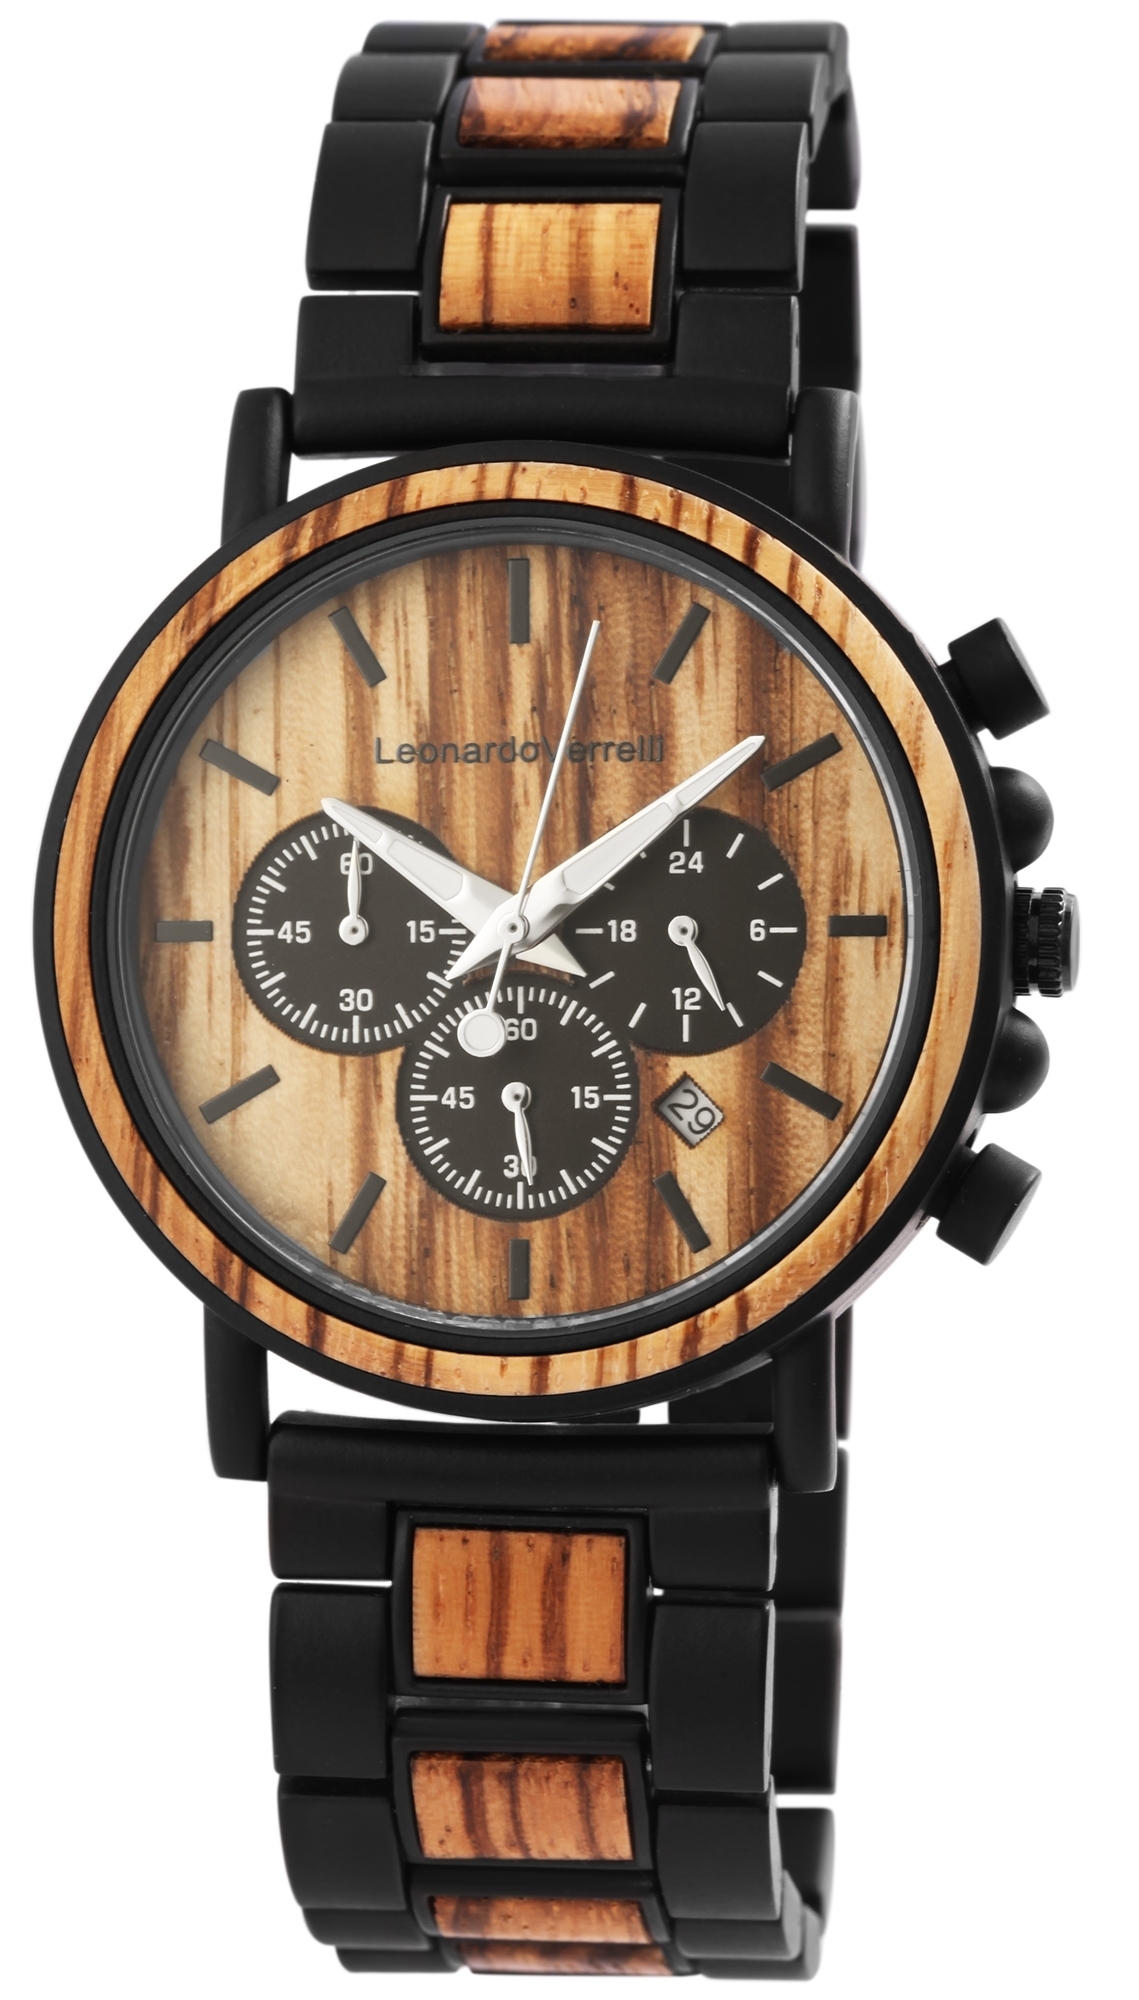 Leonardo Verrelli Herren Uhr Holz Chronograph Analog Quarz Herrenuhren Uhren 7daysin